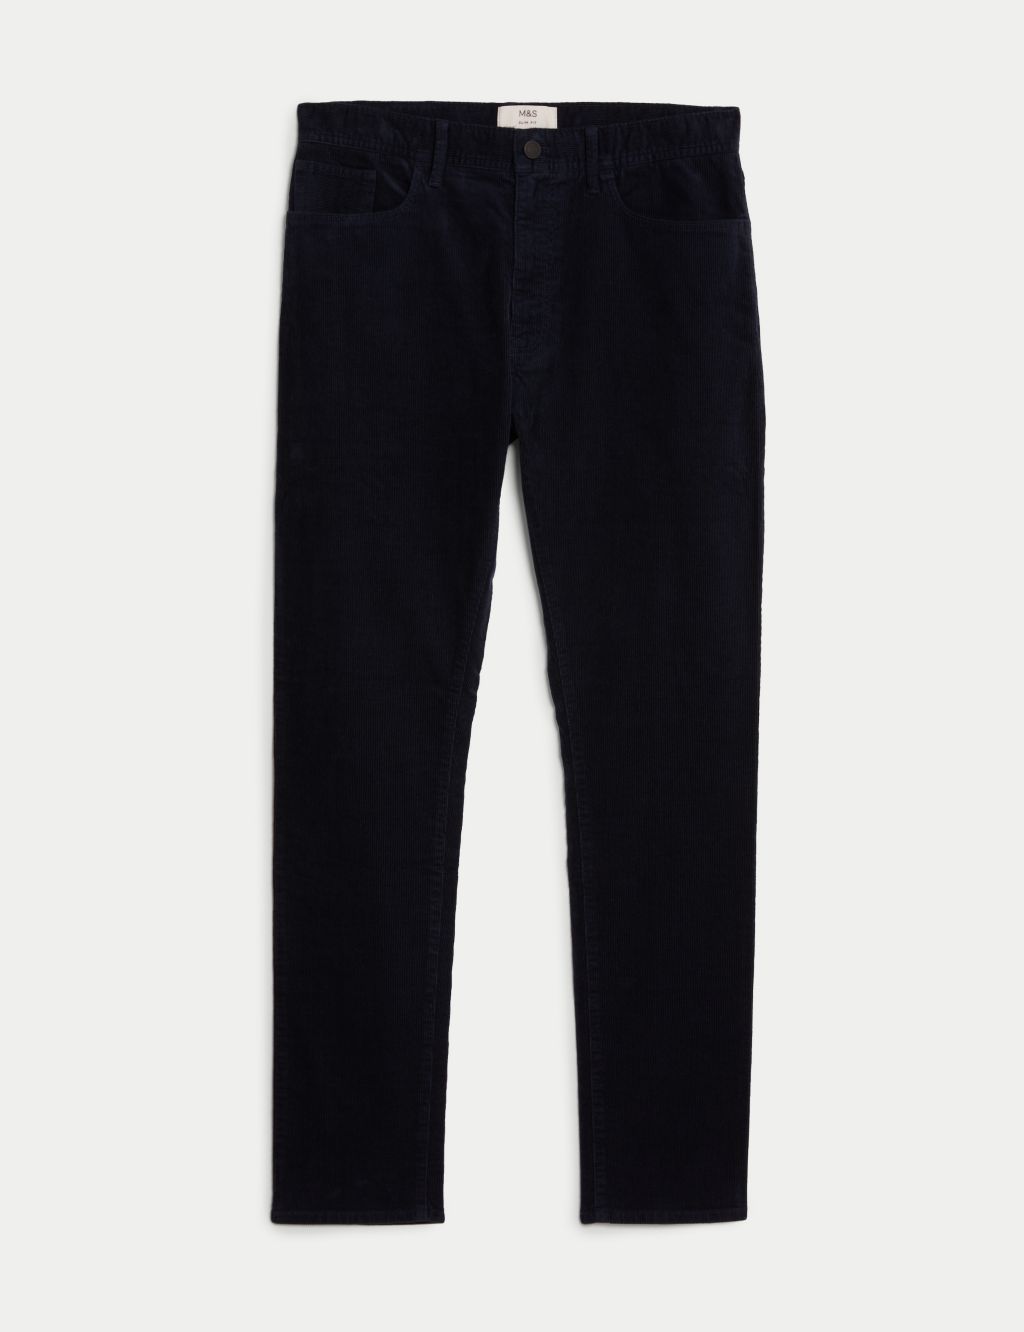 Slim Fit Corduroy 5 Pocket Trousers image 2